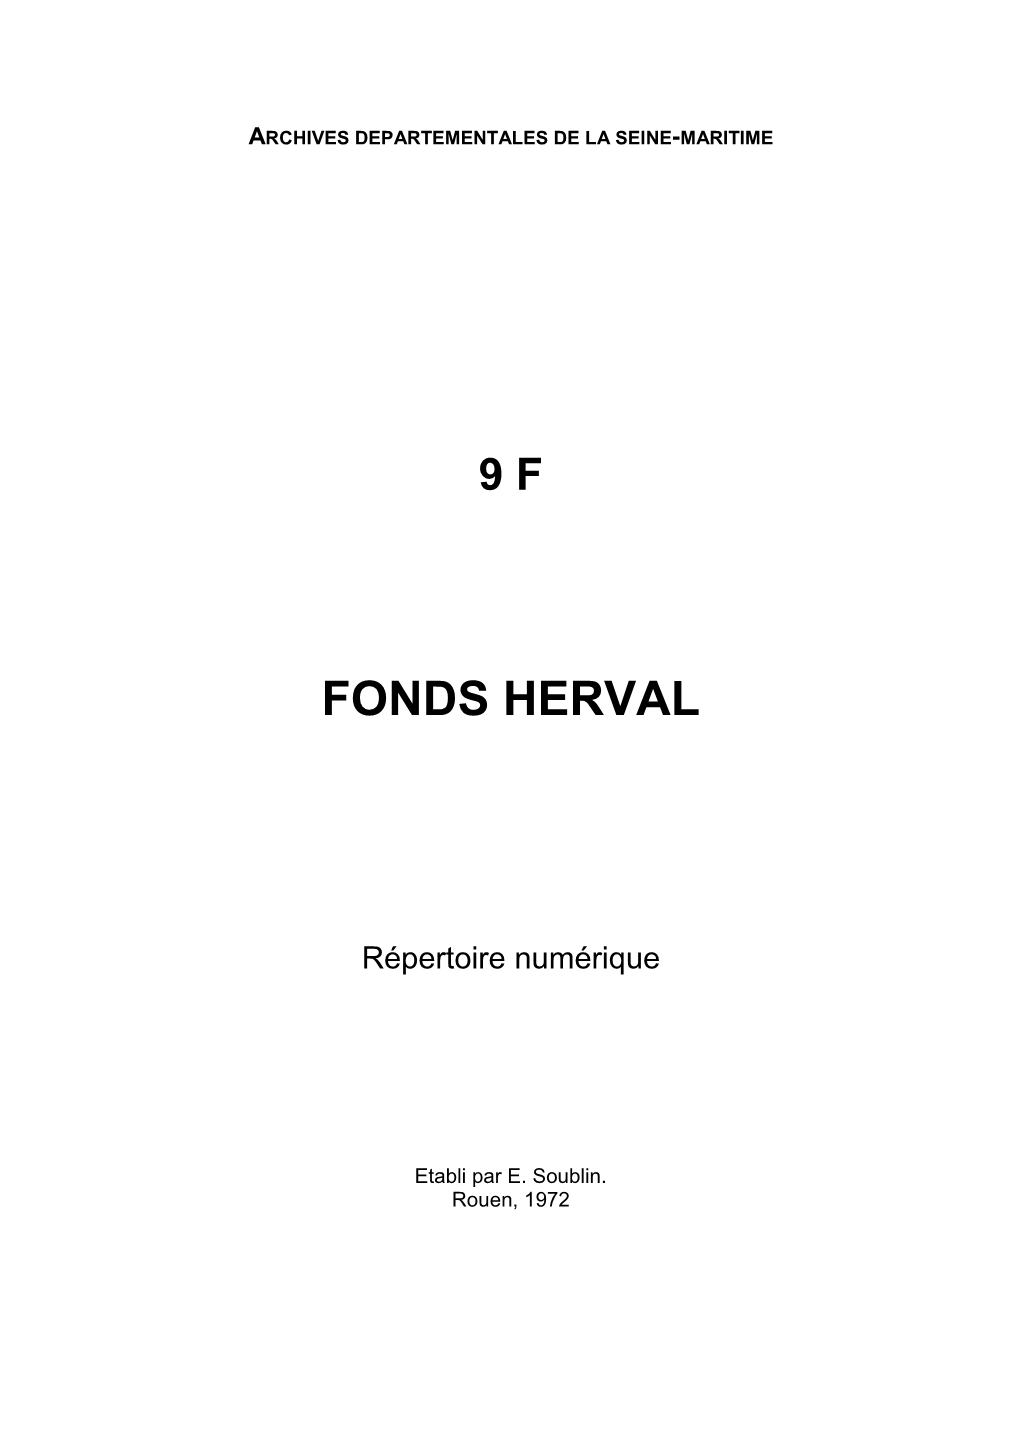 Fonds Herval